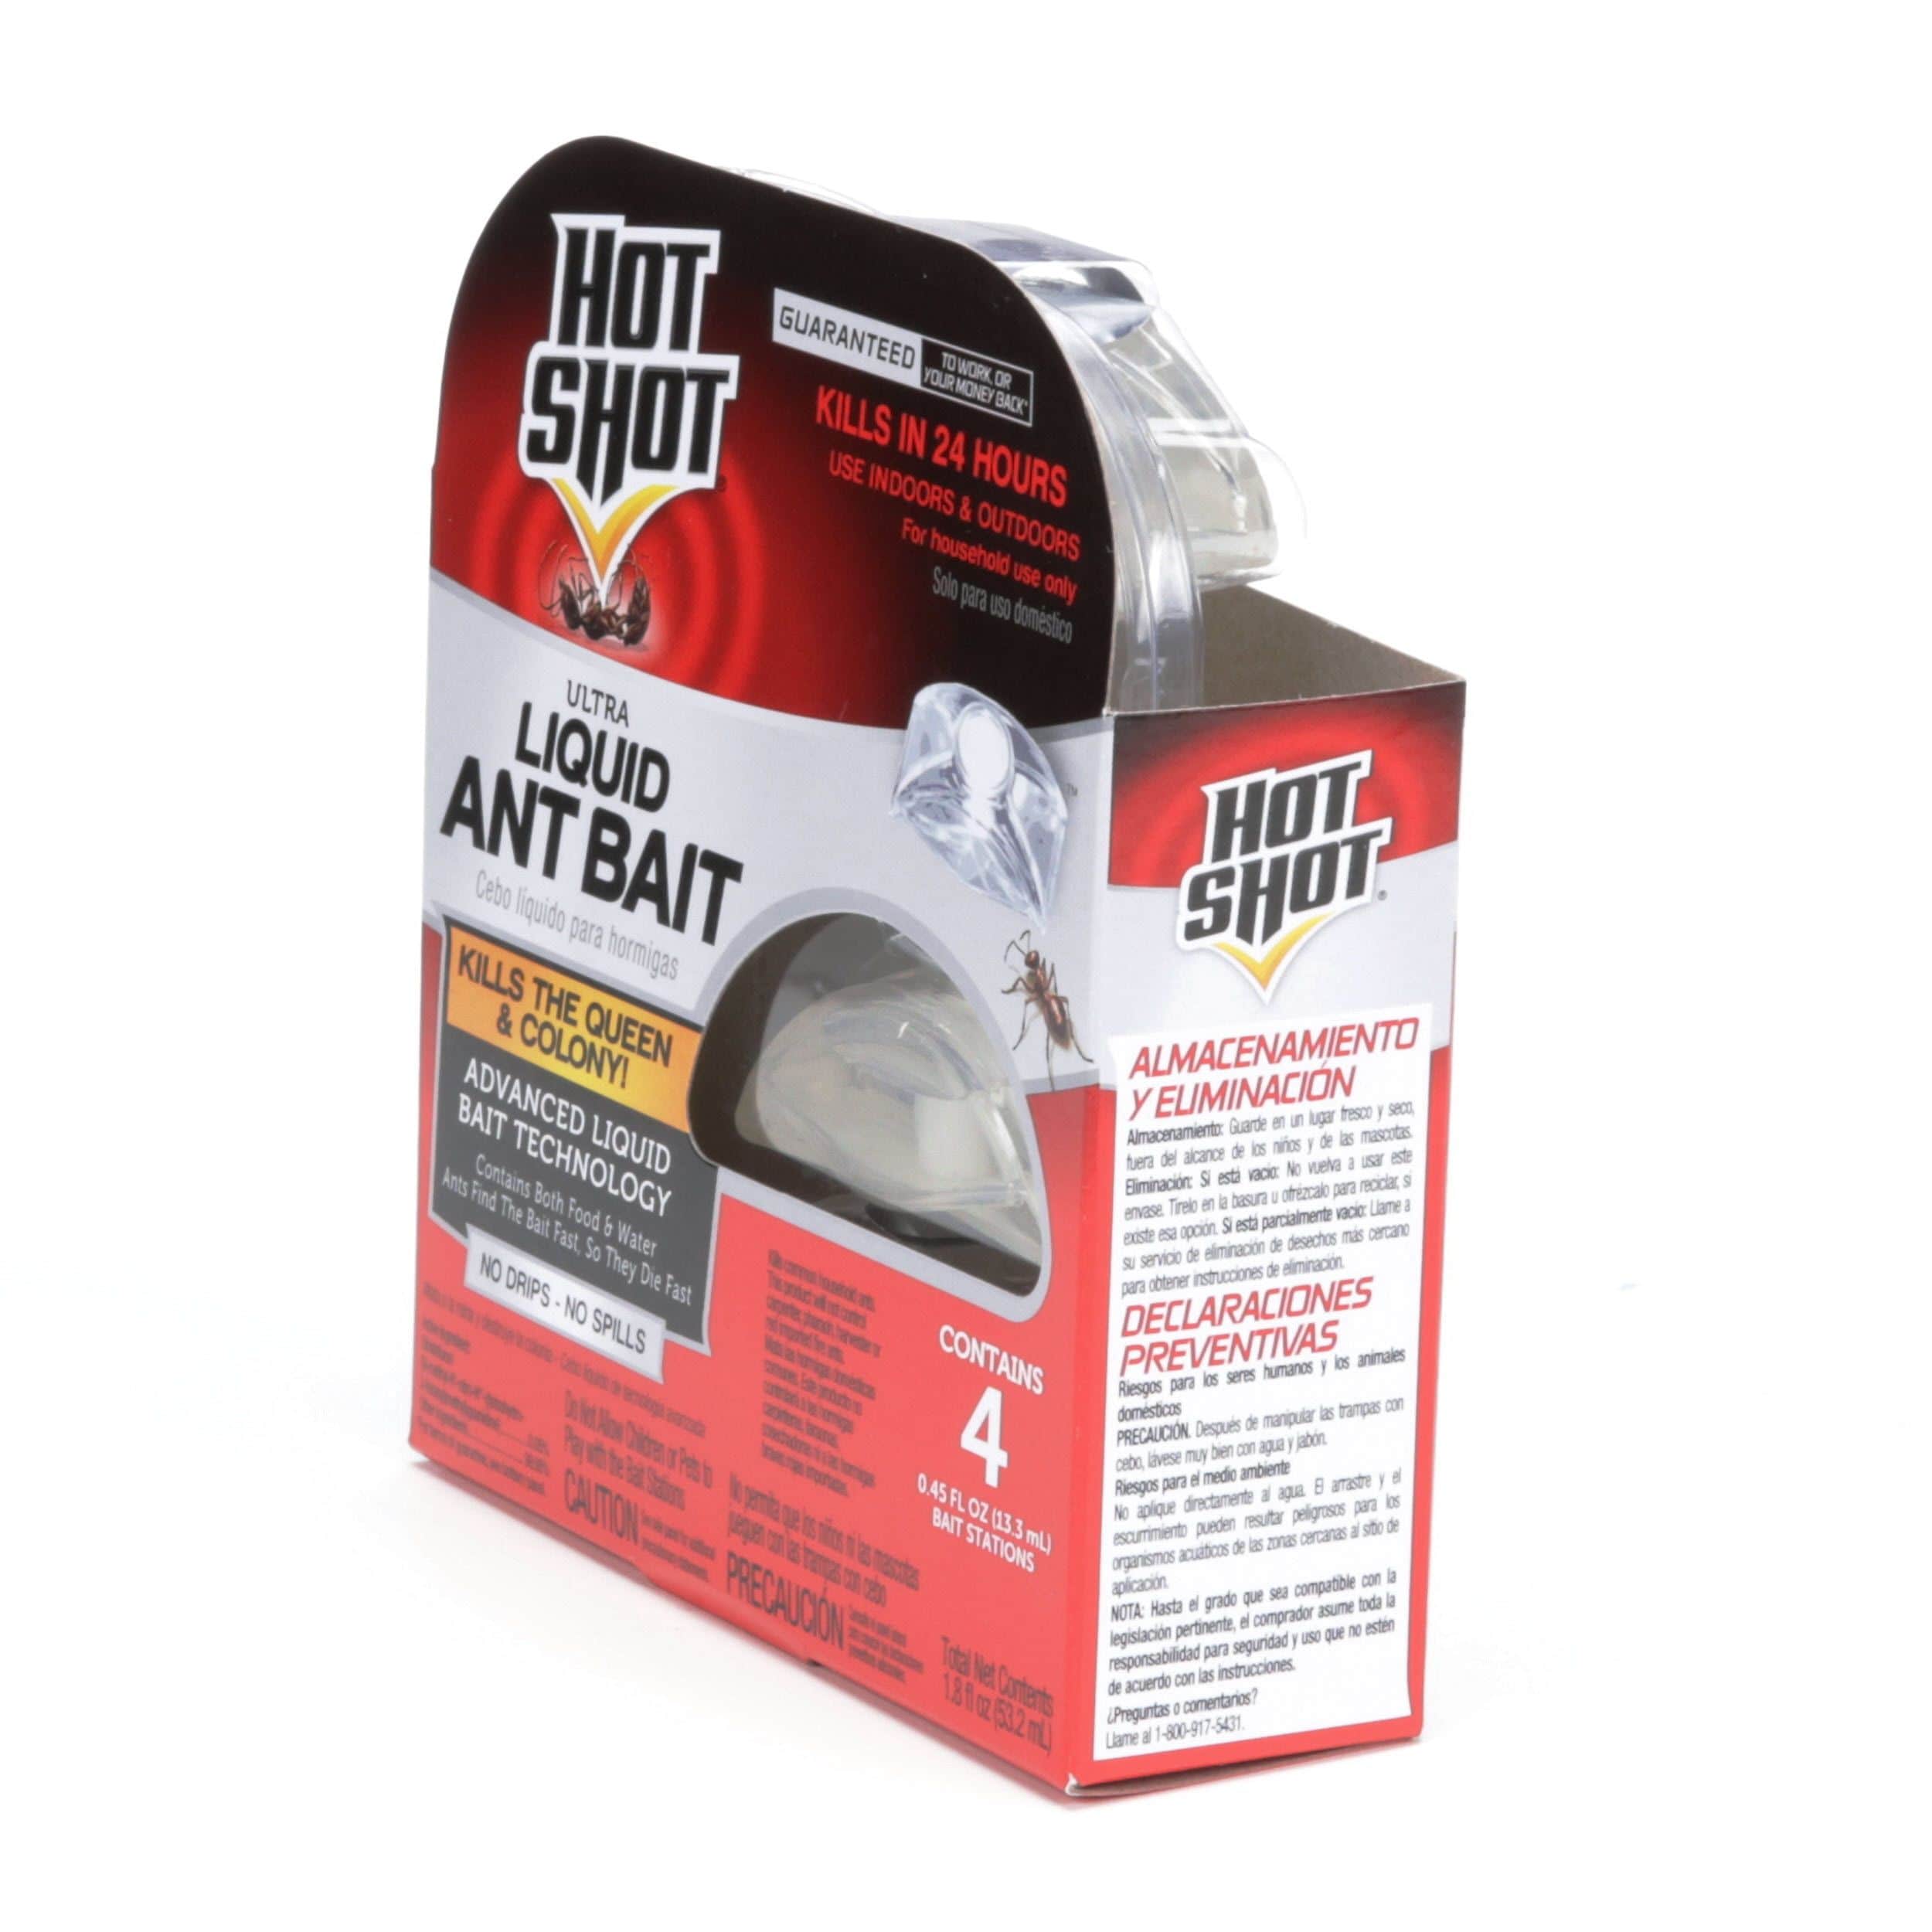 Hot Shot MaxAttrax Ant Bait, Child-Resistant Bait Station,, 41% OFF